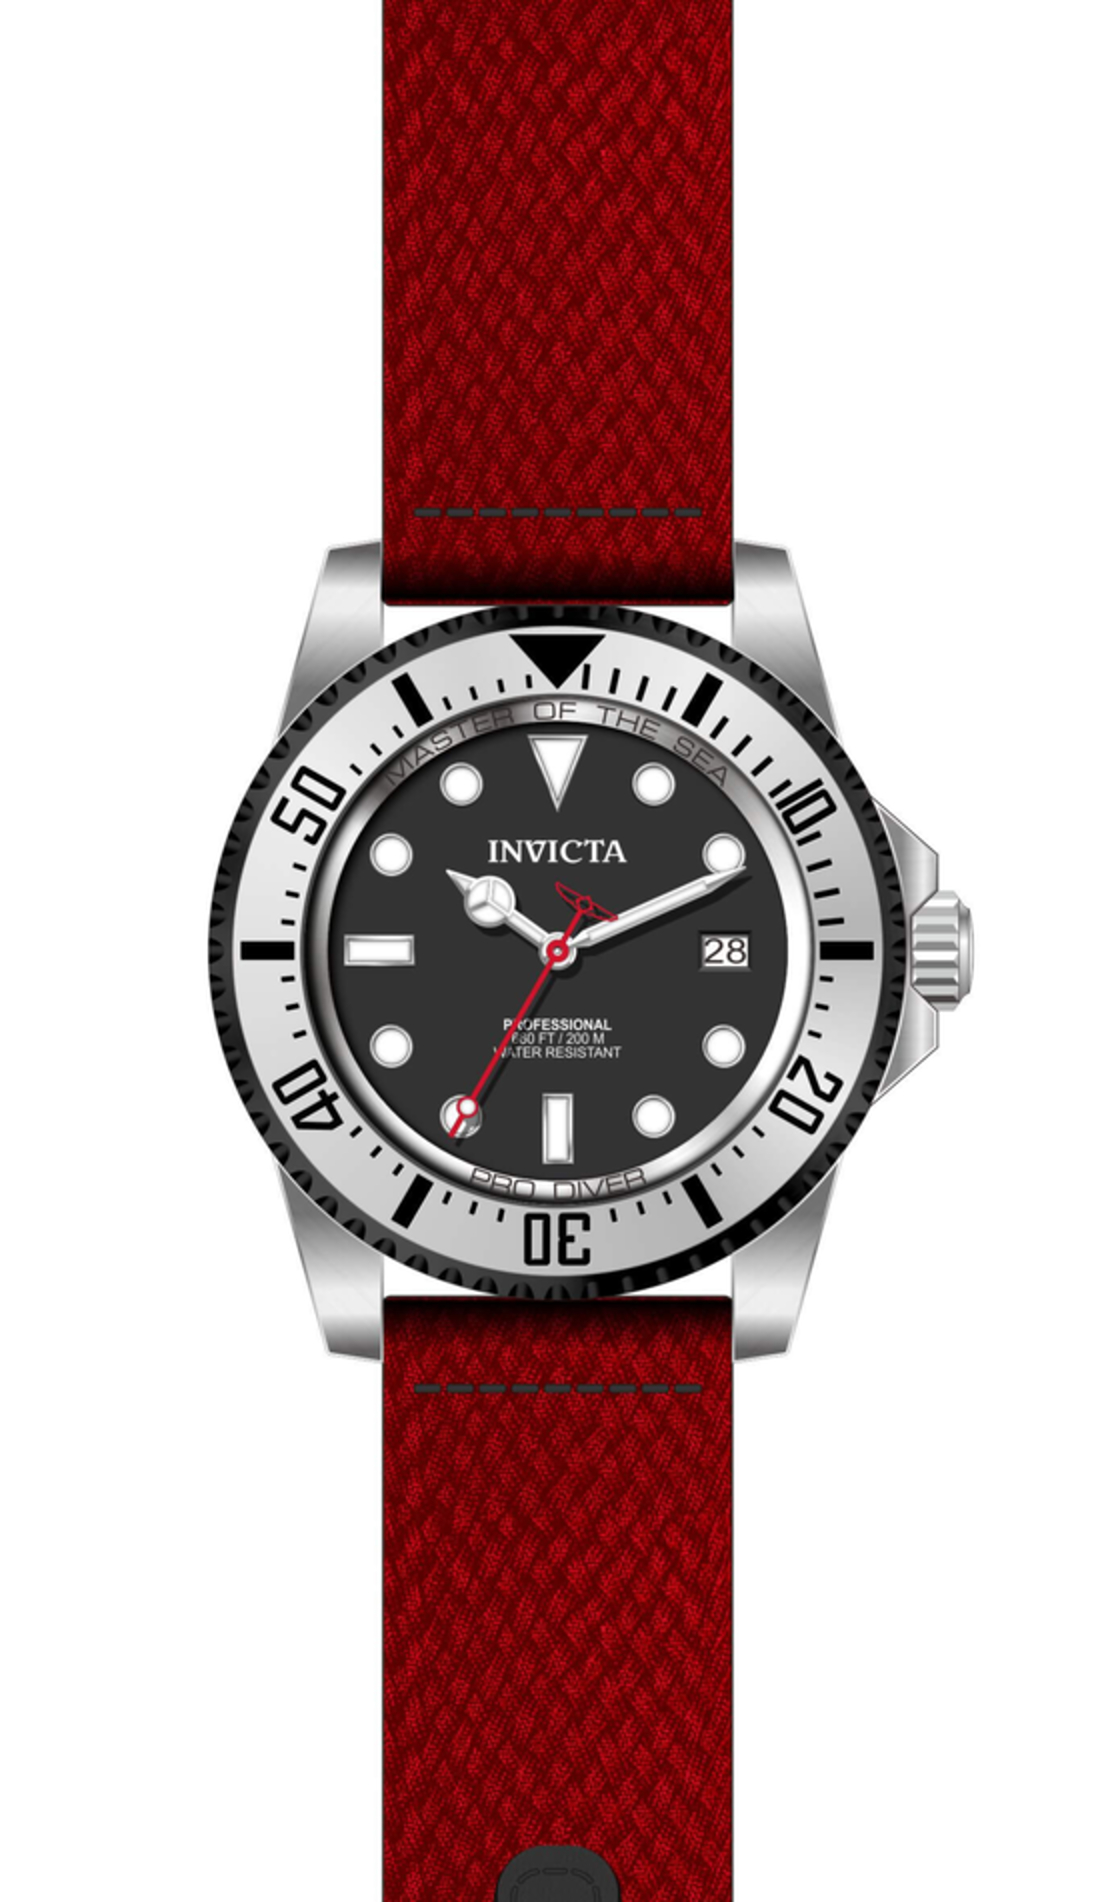 שעון Invicta Pro Diver  לגבר דגם 35486